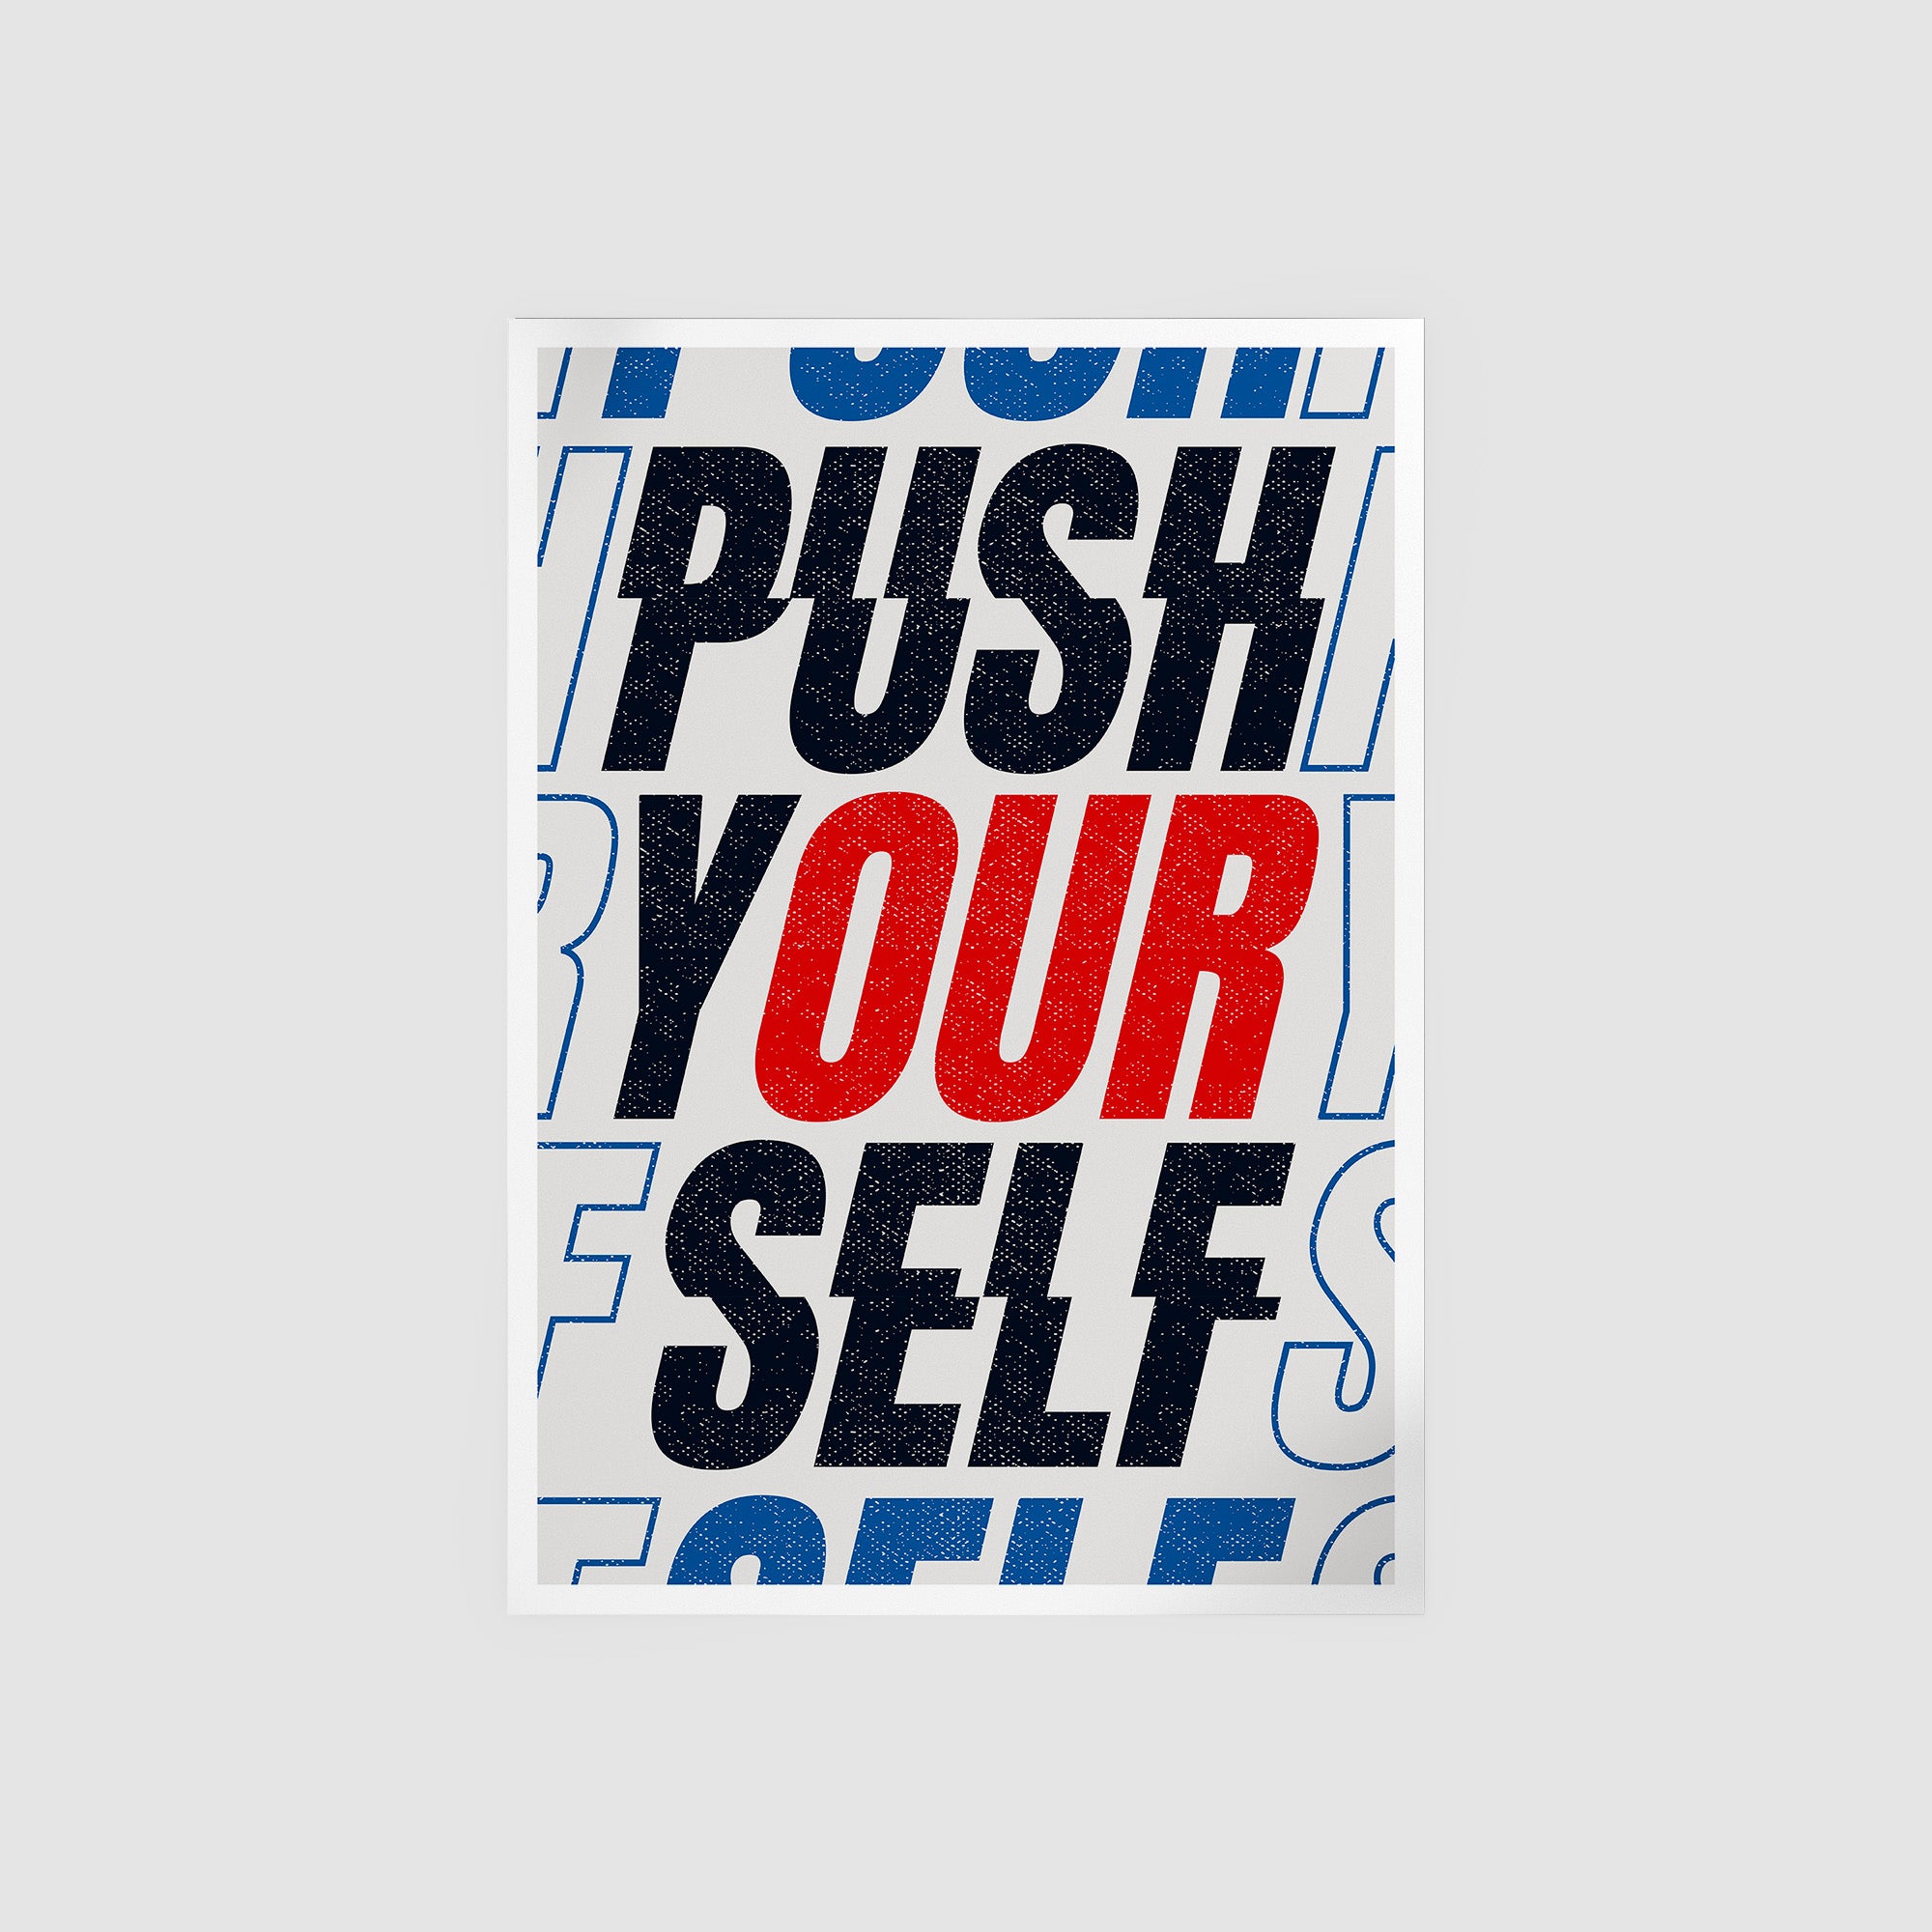 Push Your Self